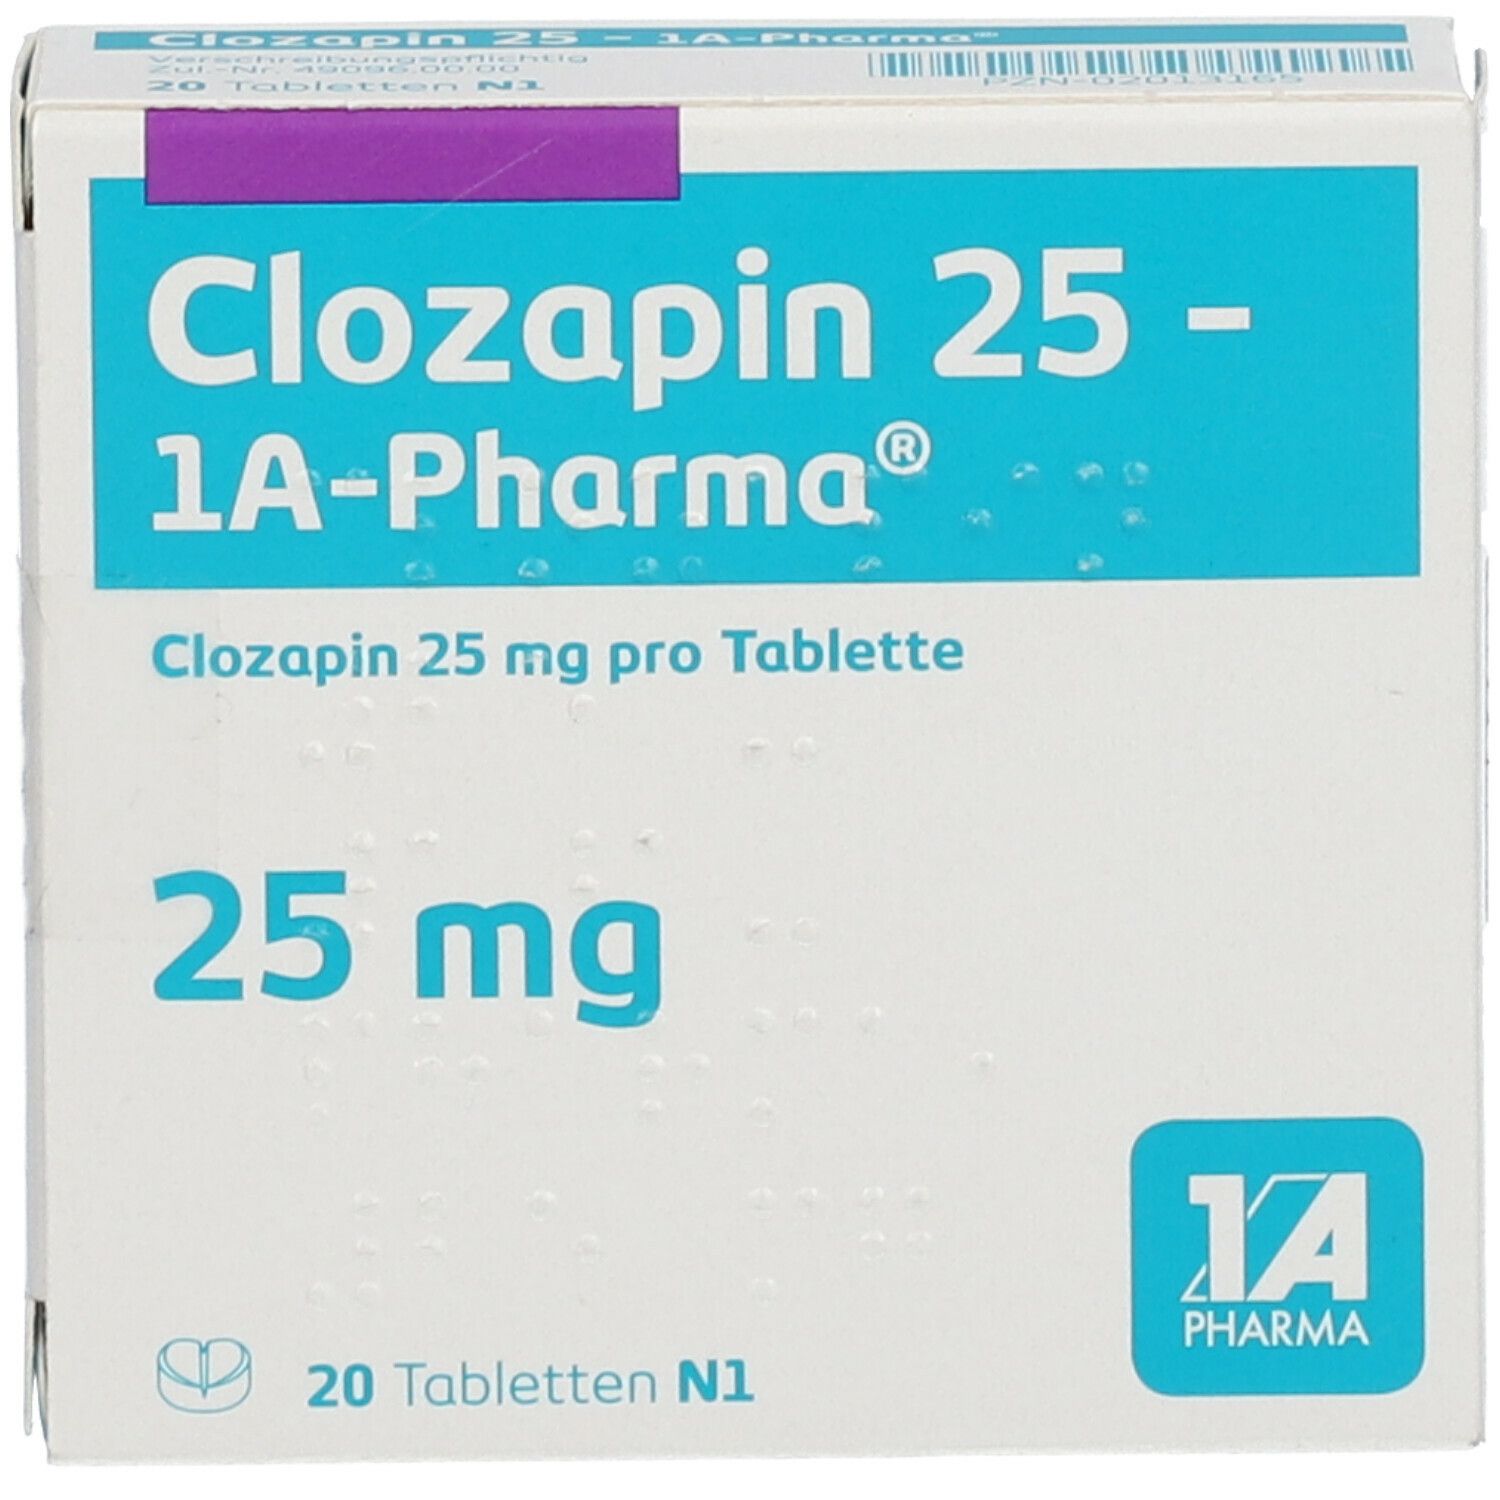 Clozapin 25 1A Pharma®